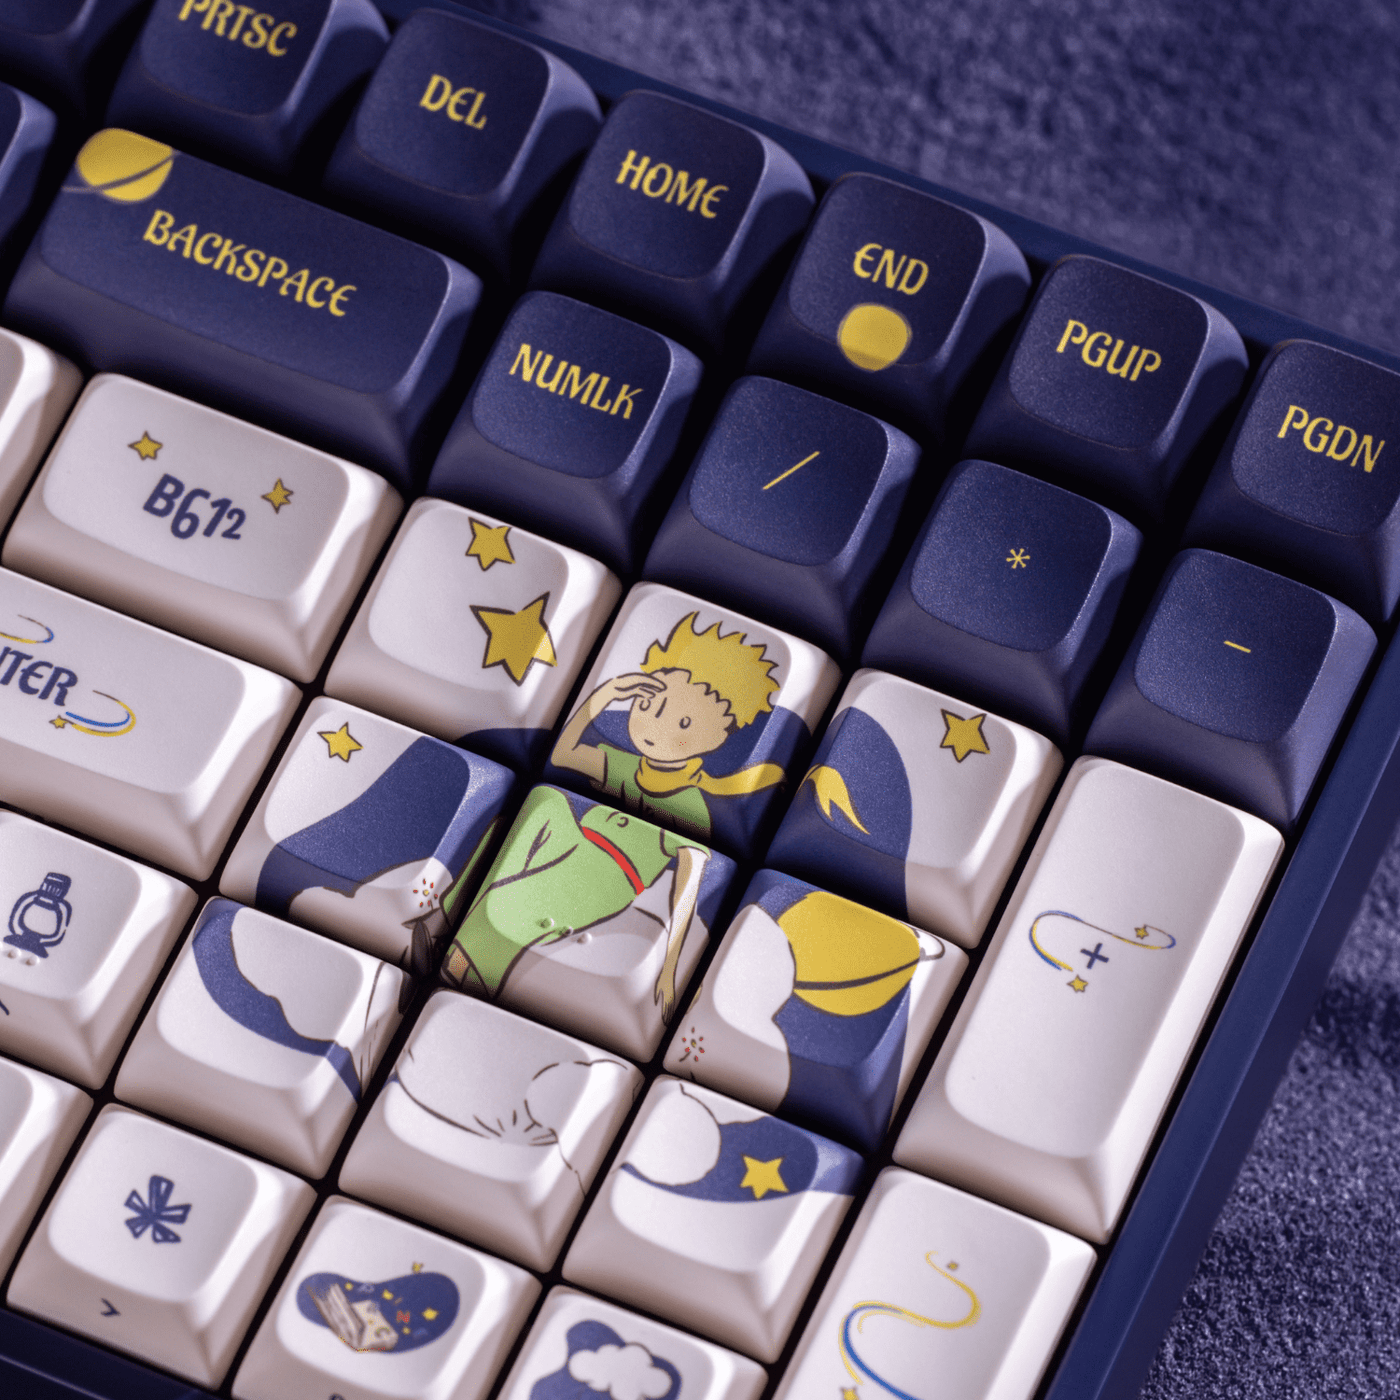 Le Petit Prince keyboard